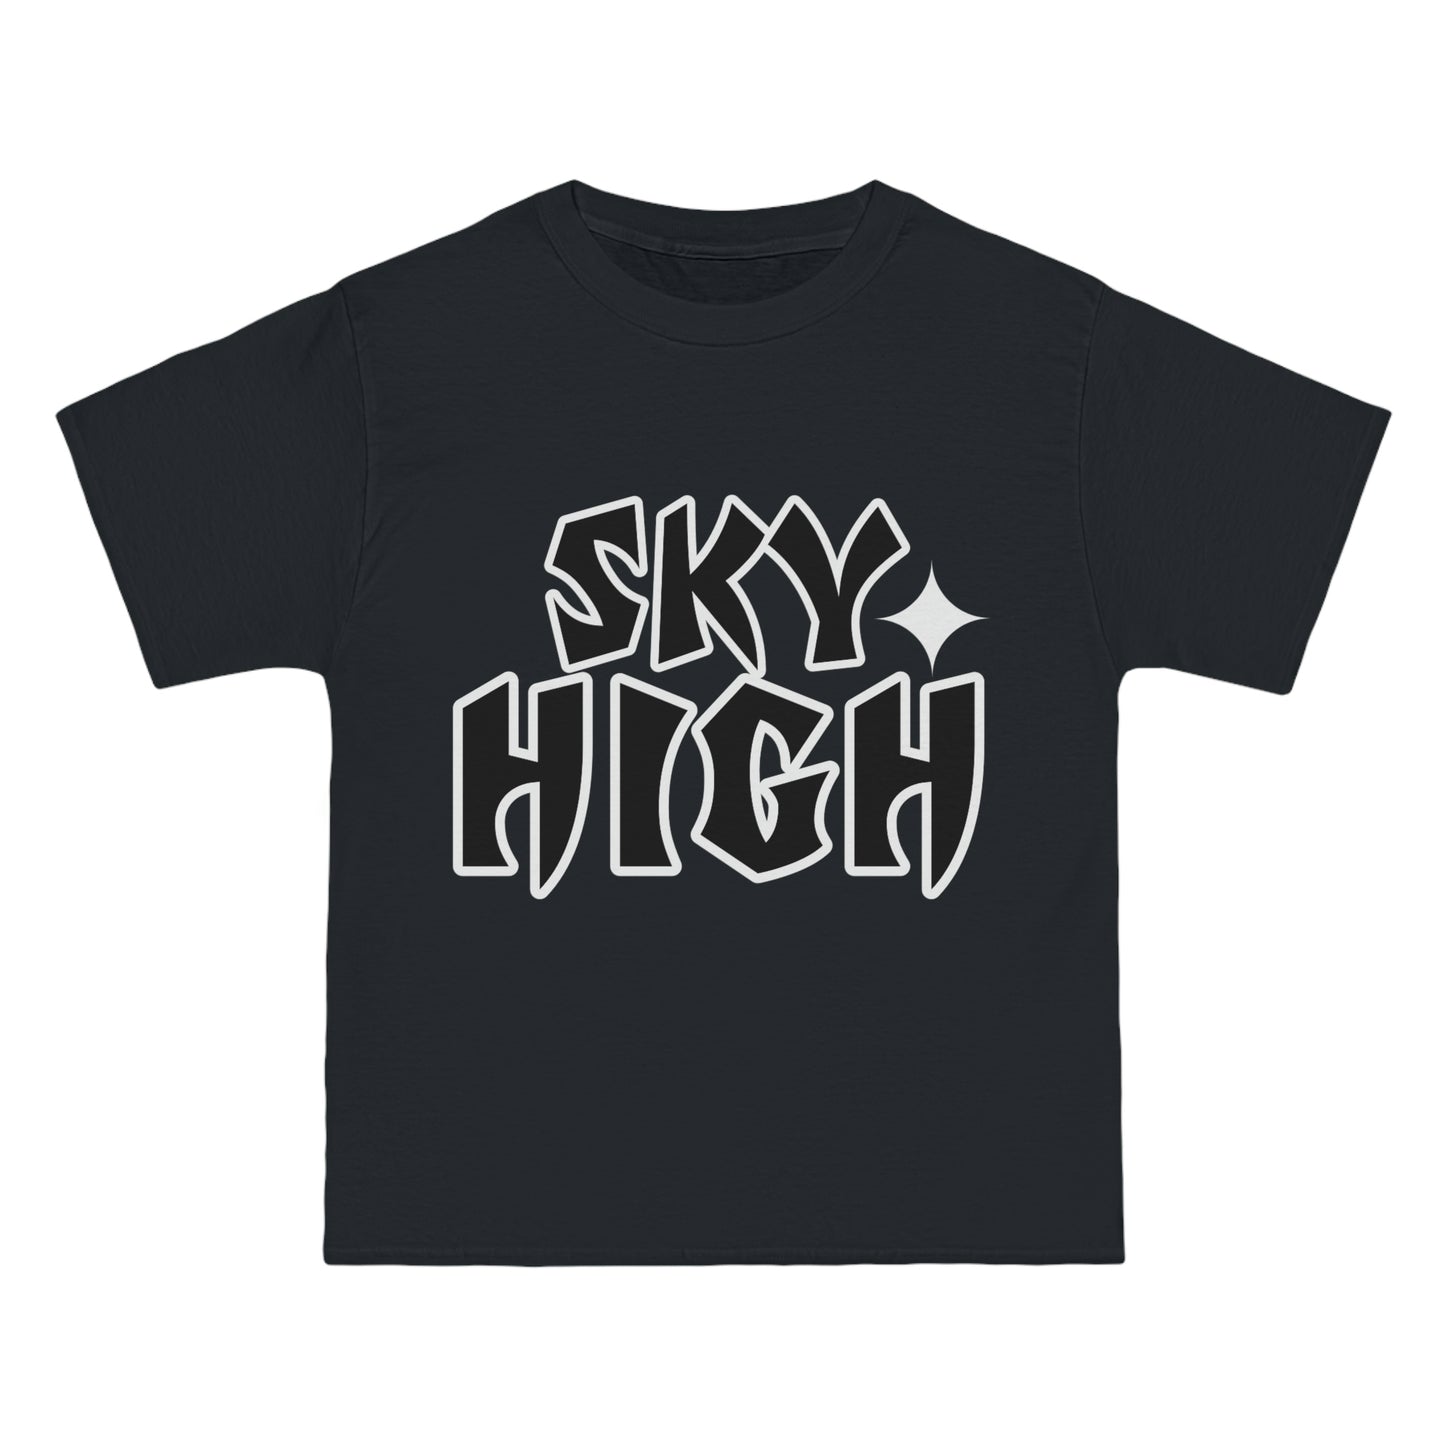 Black/Light Blue Sky High Star T-Shirt